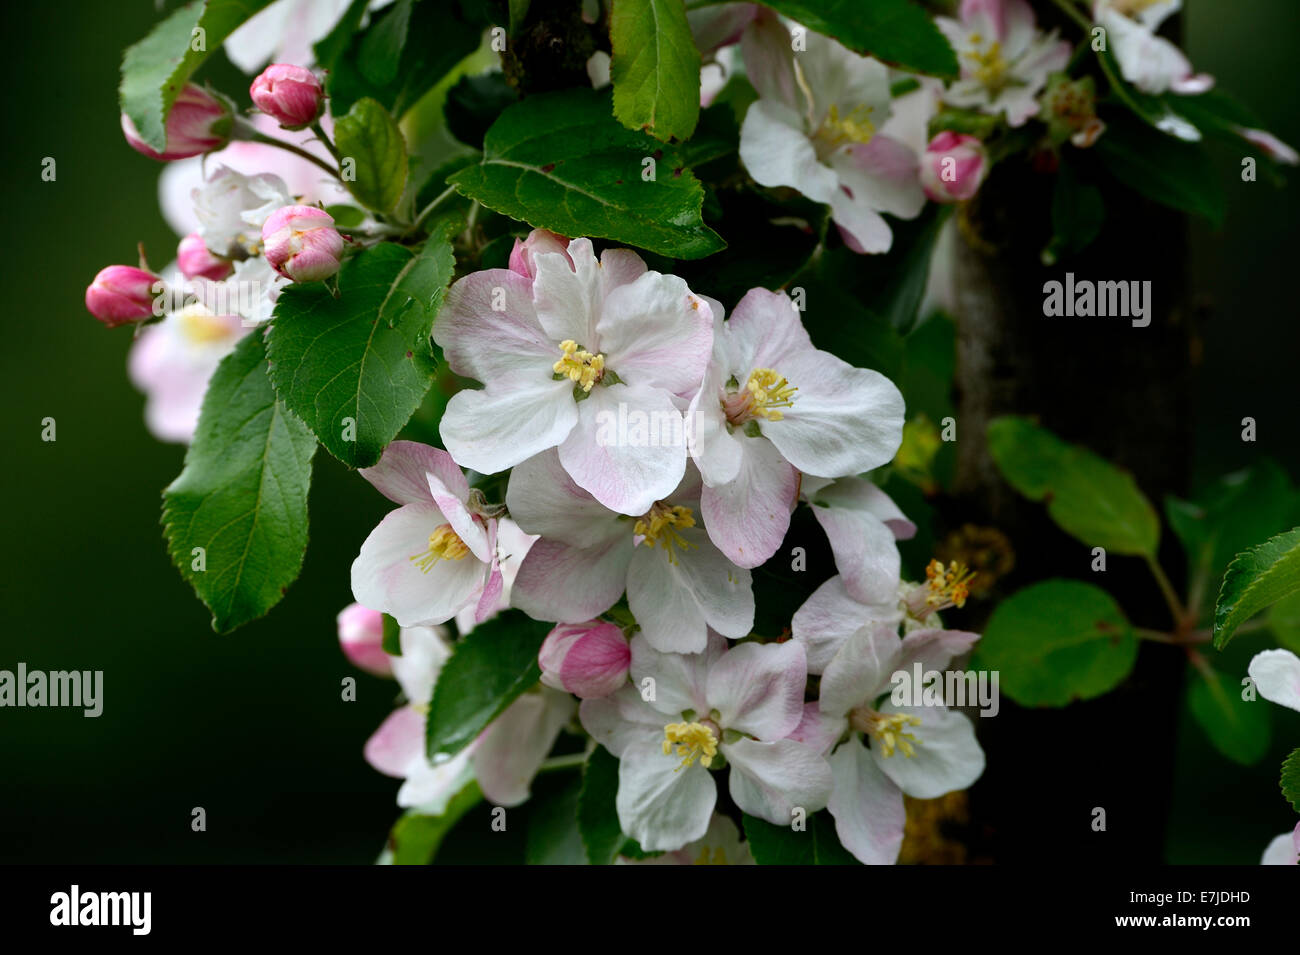 Blüten, Frühling, Baum Blüte, zarte Blüten, Sprossen, Obst Blüten, Blütenblätter, Deutschland, Europa, Stockfoto